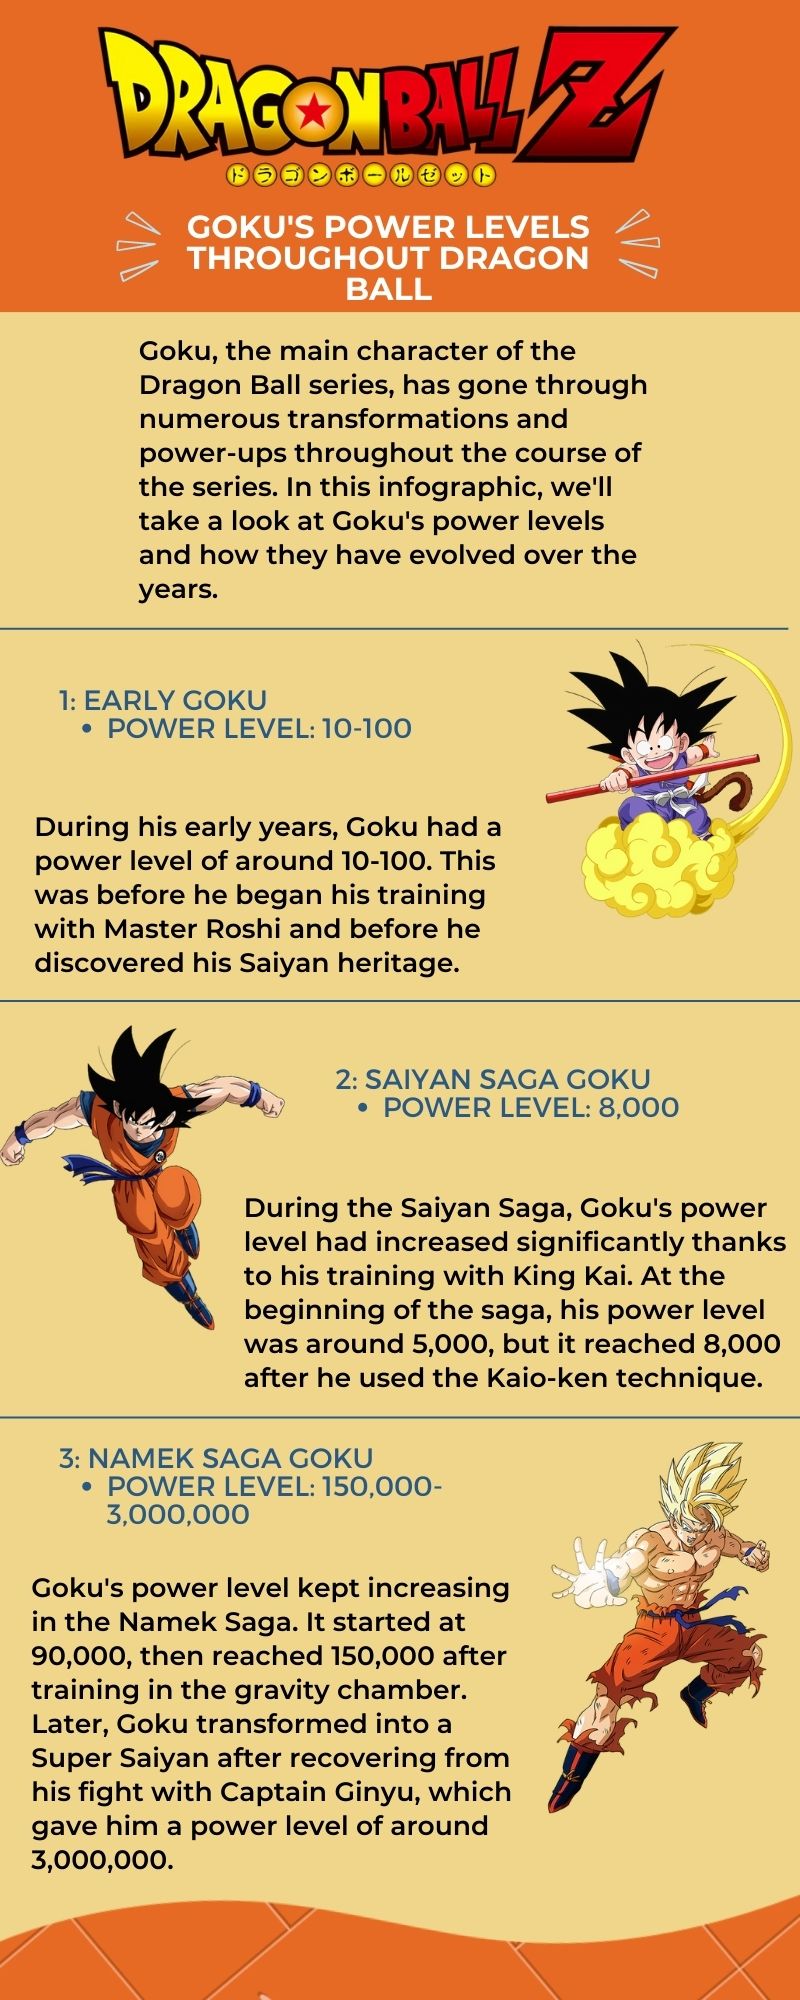 Gokus-Power-Levels-Throughout-Dragon-Ball1.jpg 